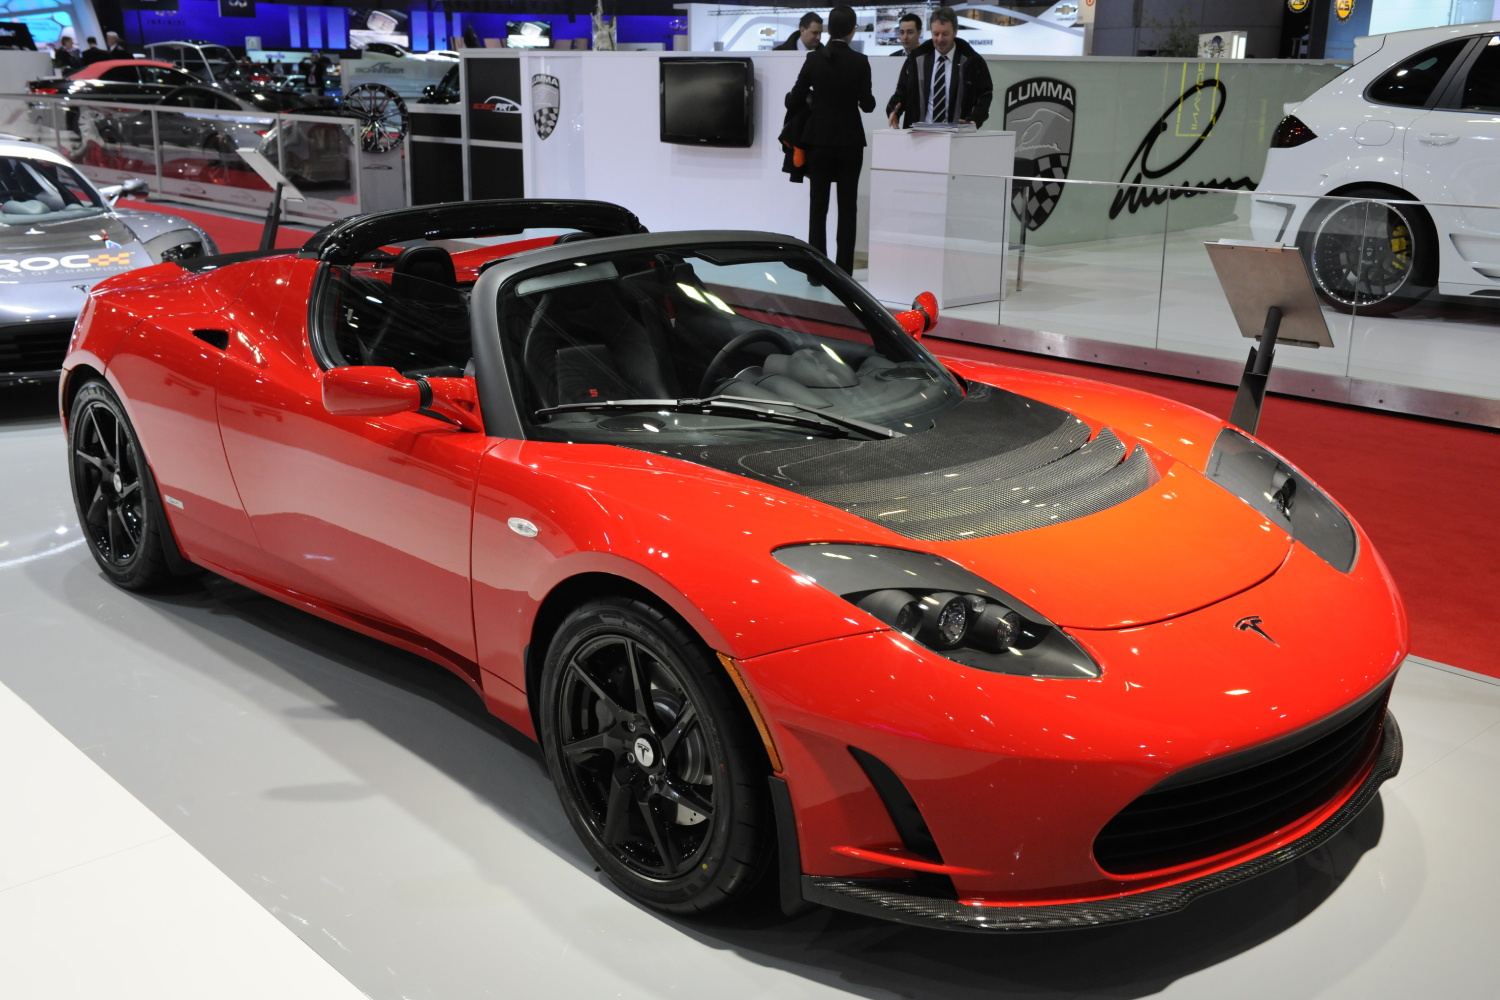 The Tesla Roadster electric vehicle